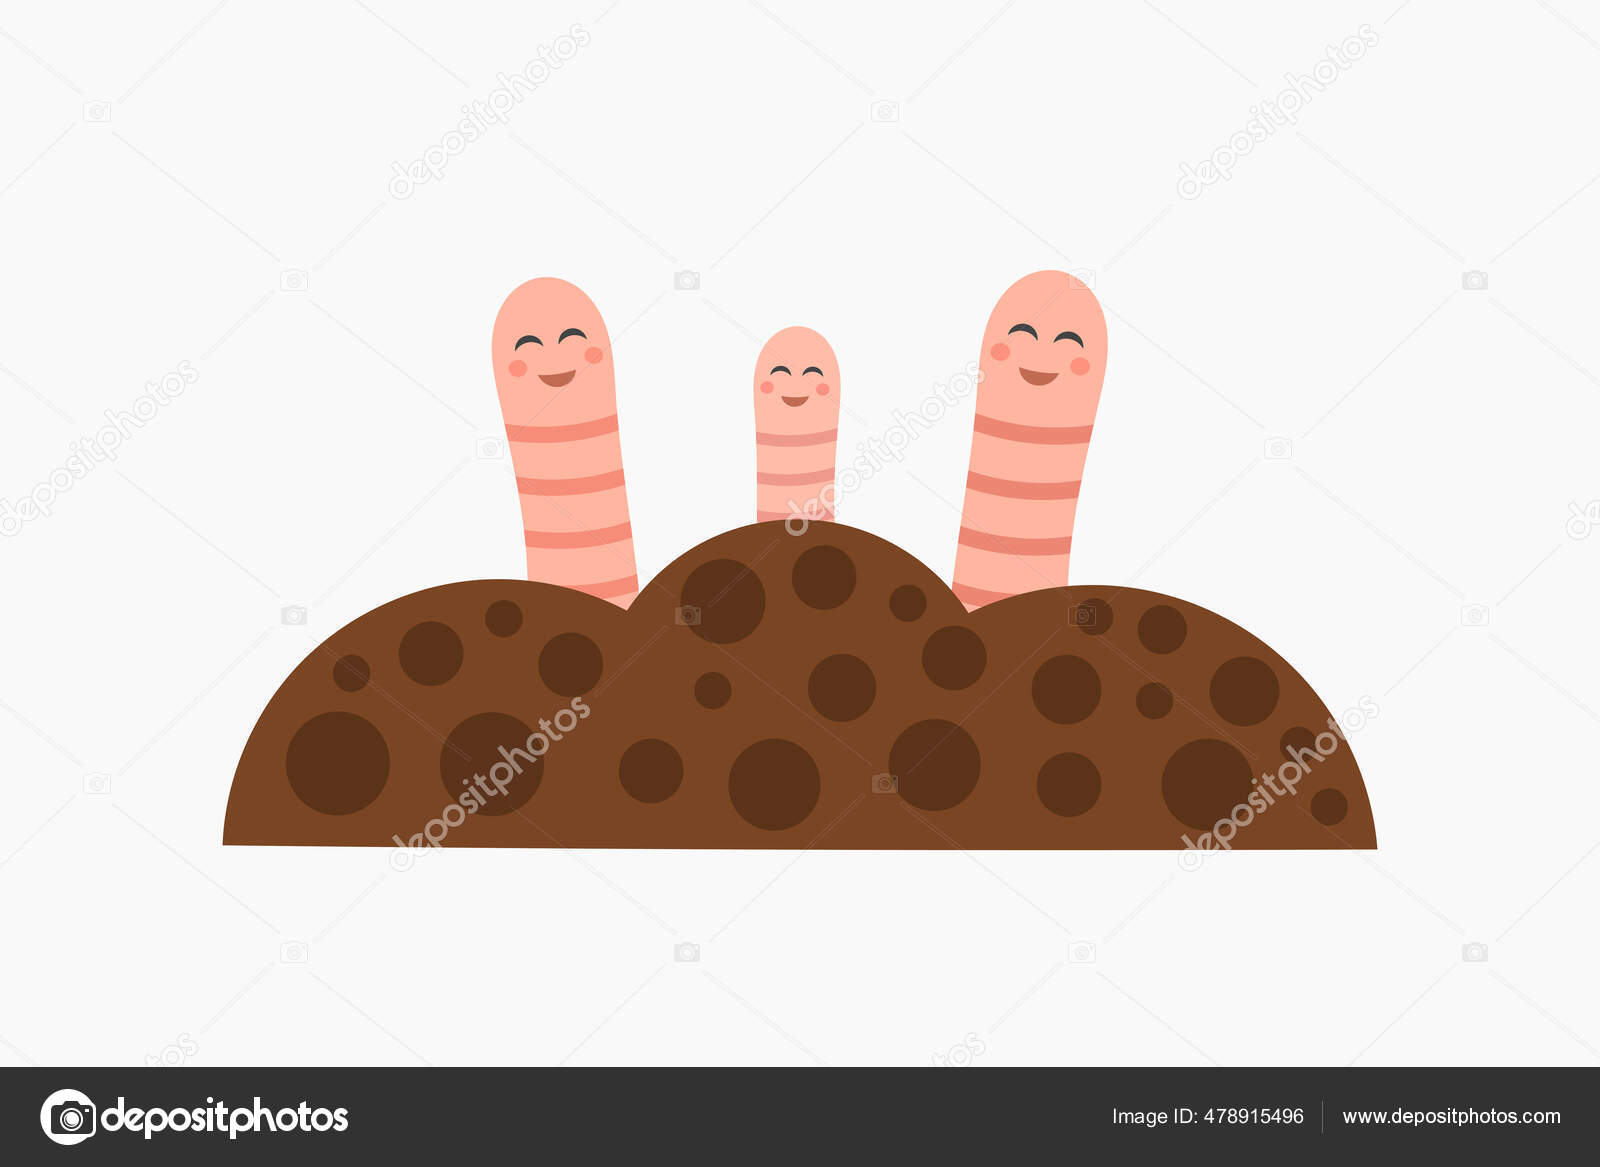 https://st2.depositphotos.com/2046901/47891/v/1600/depositphotos_478915496-stock-illustration-cute-earthworms-happy-family-garden.jpg